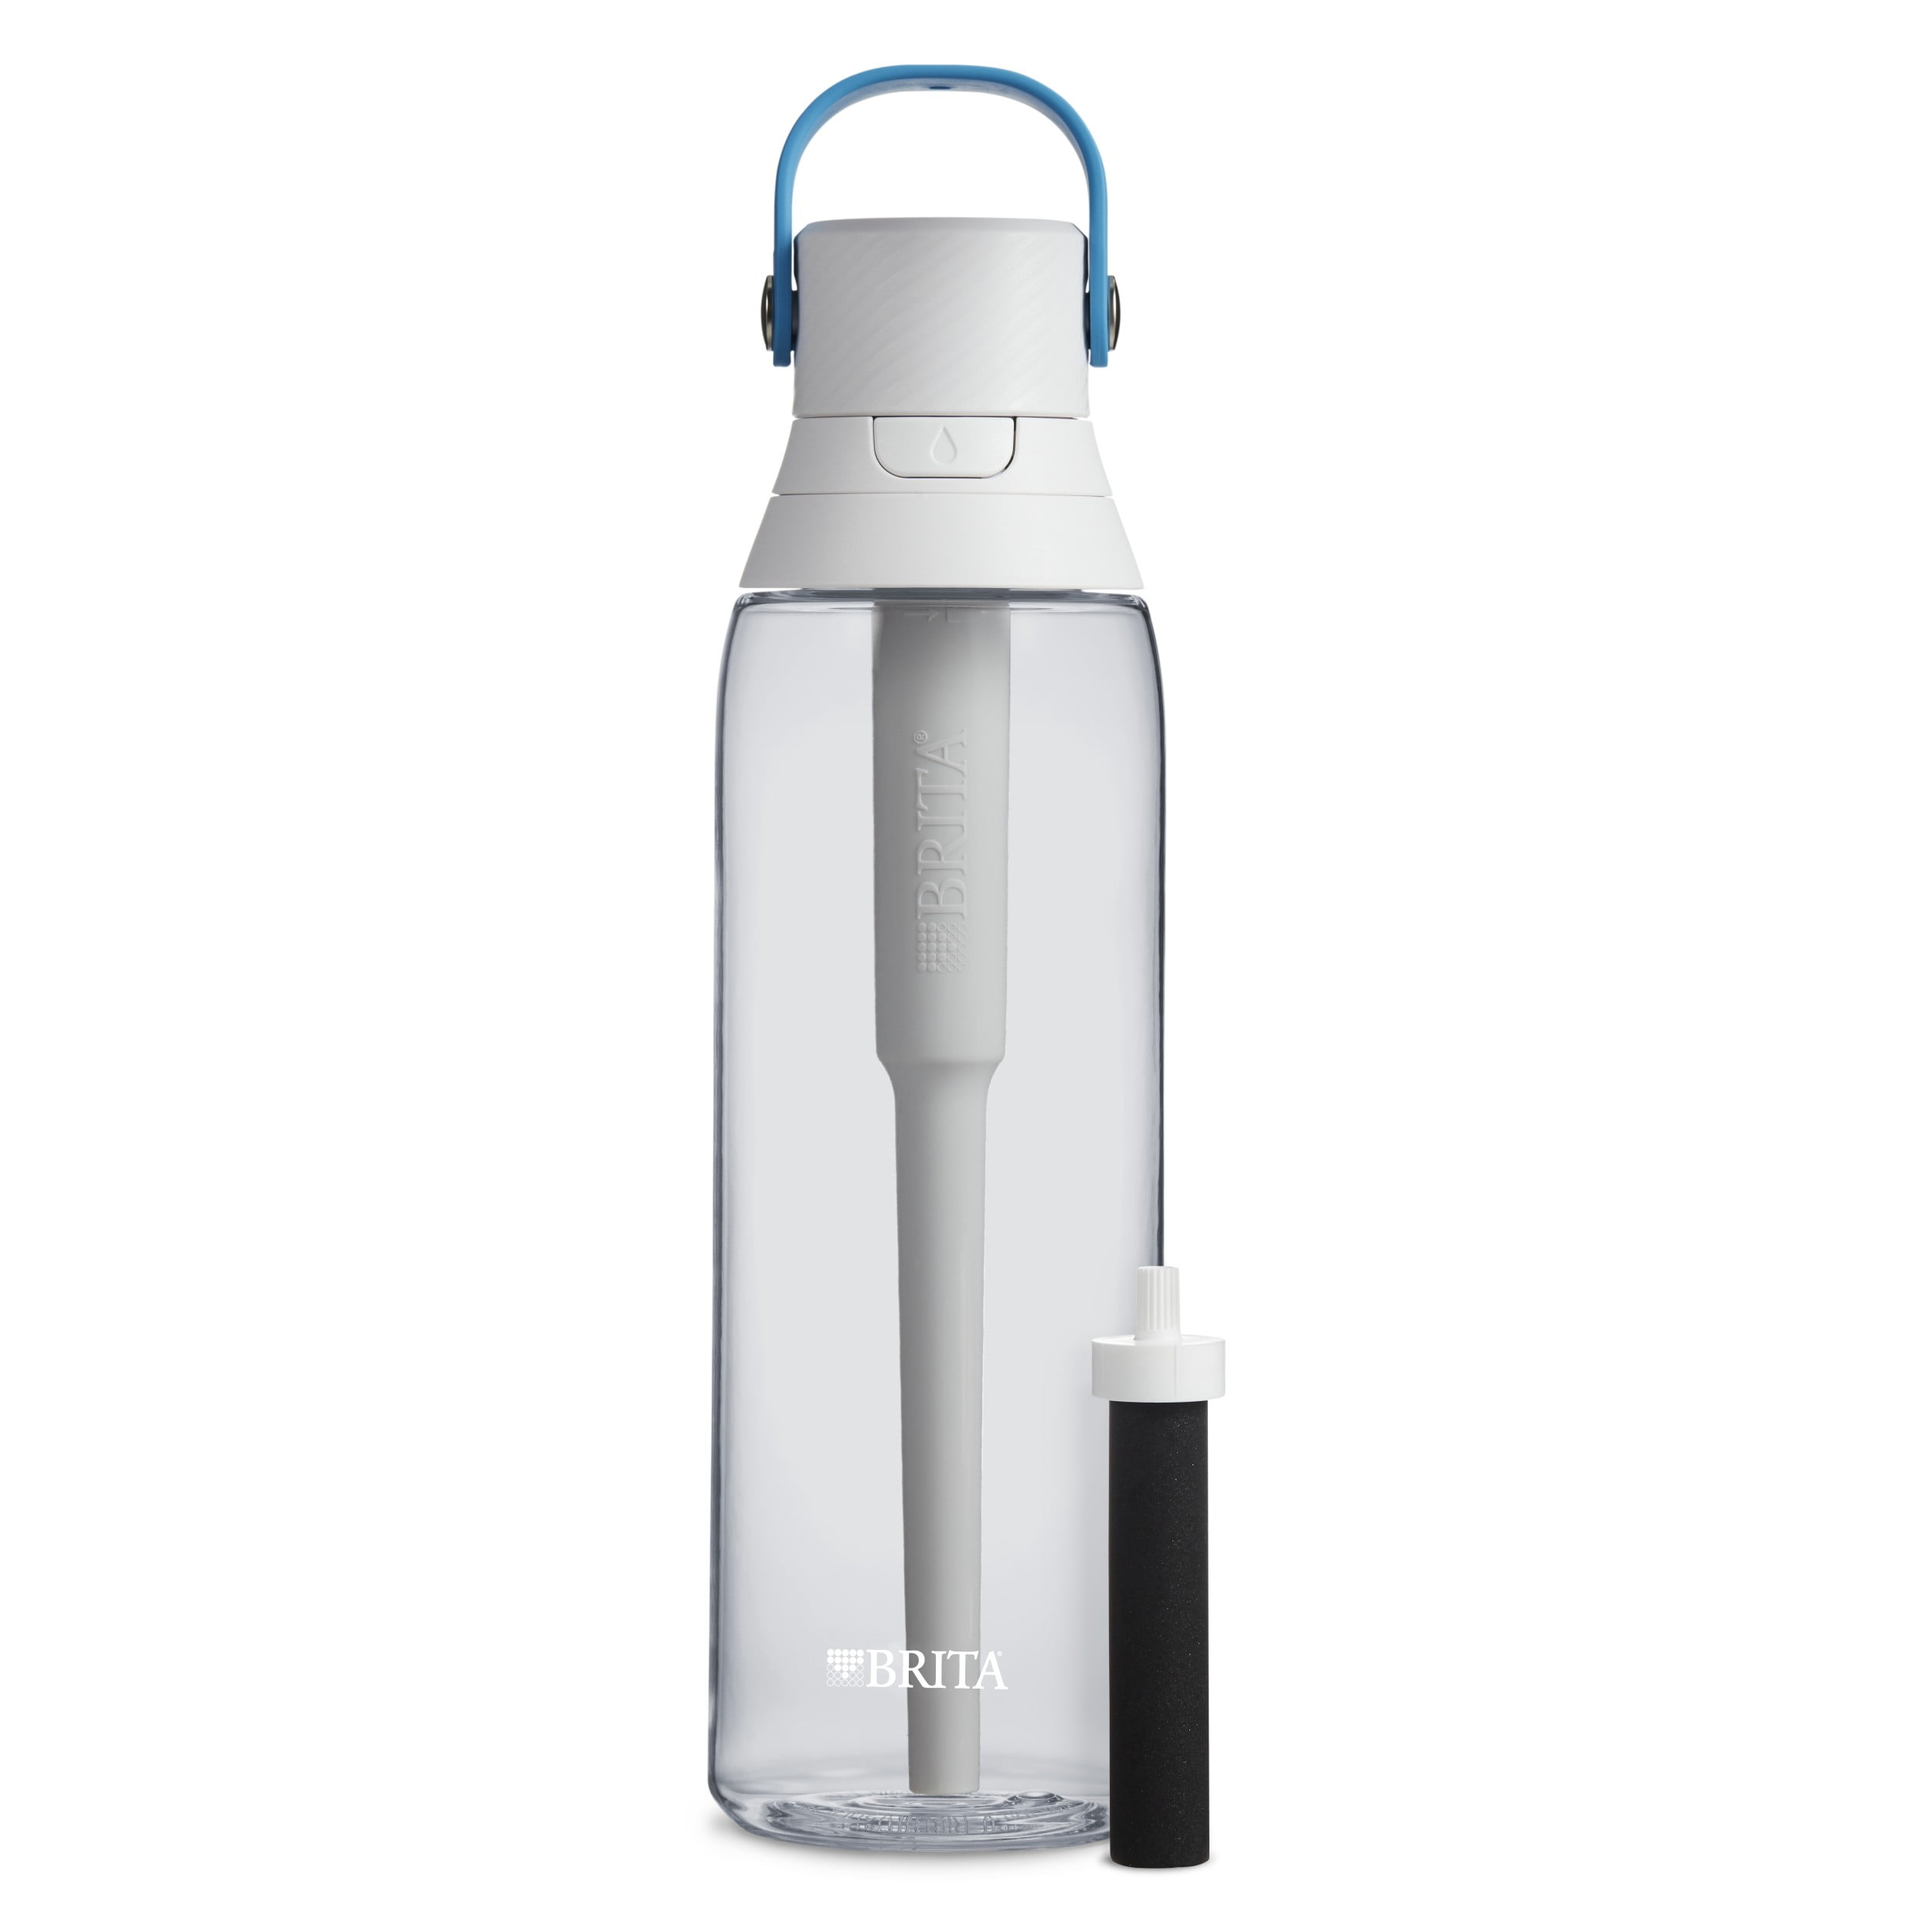 Brita Premium Filtering Water Bottle Unboxing & Review 